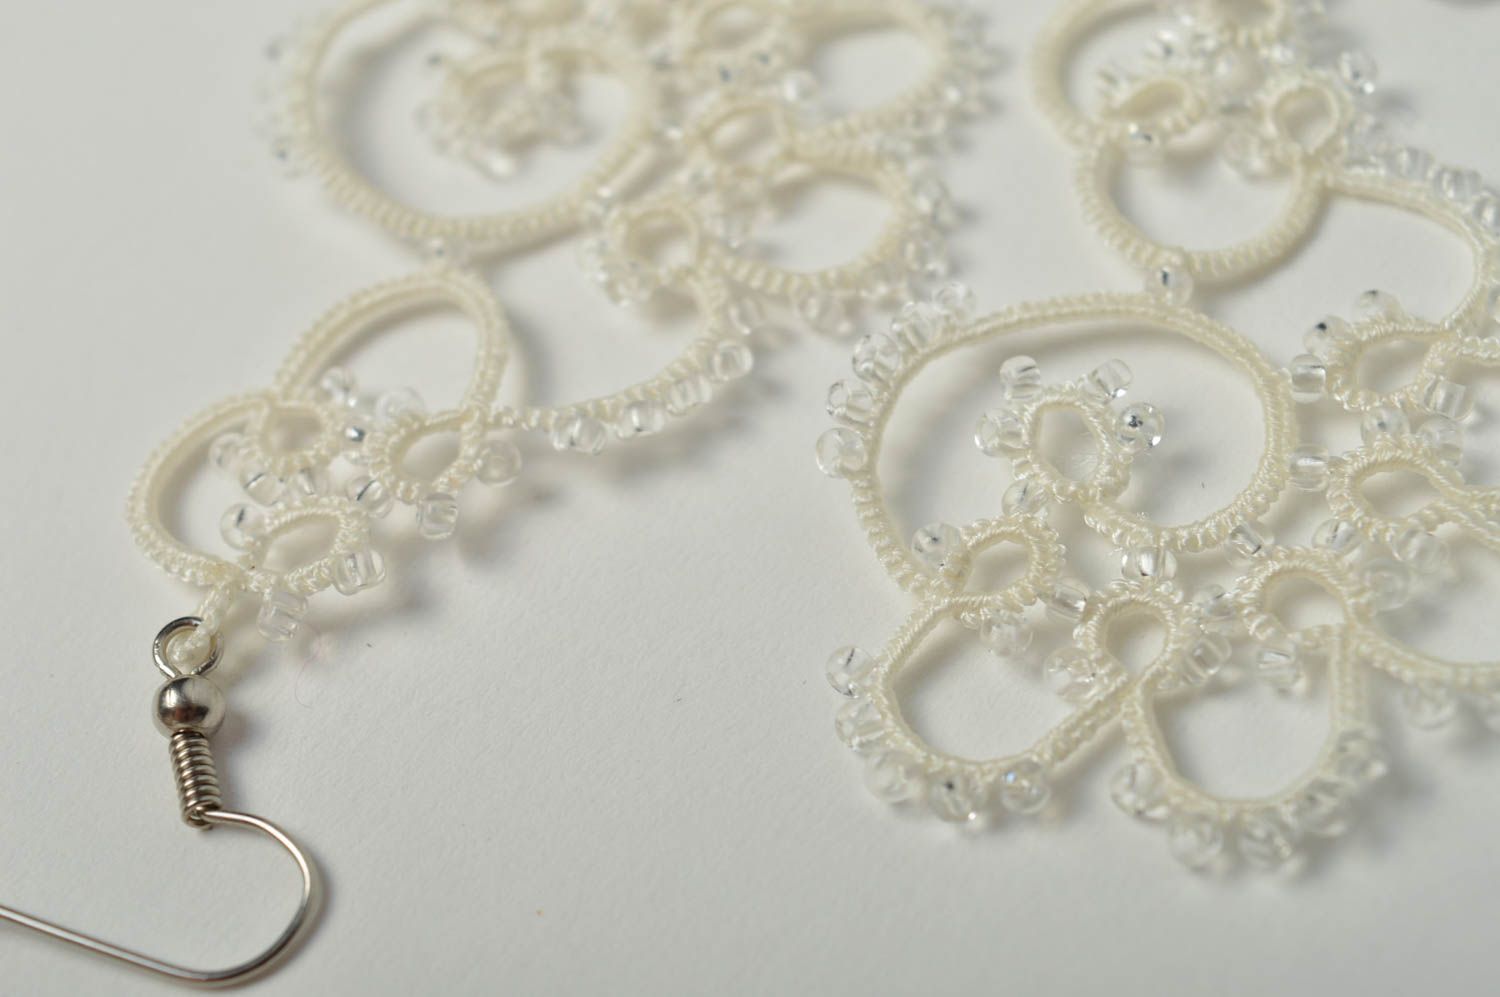 Handmade woven lace earrings artisan jewelry designs beautiful jewellery photo 5